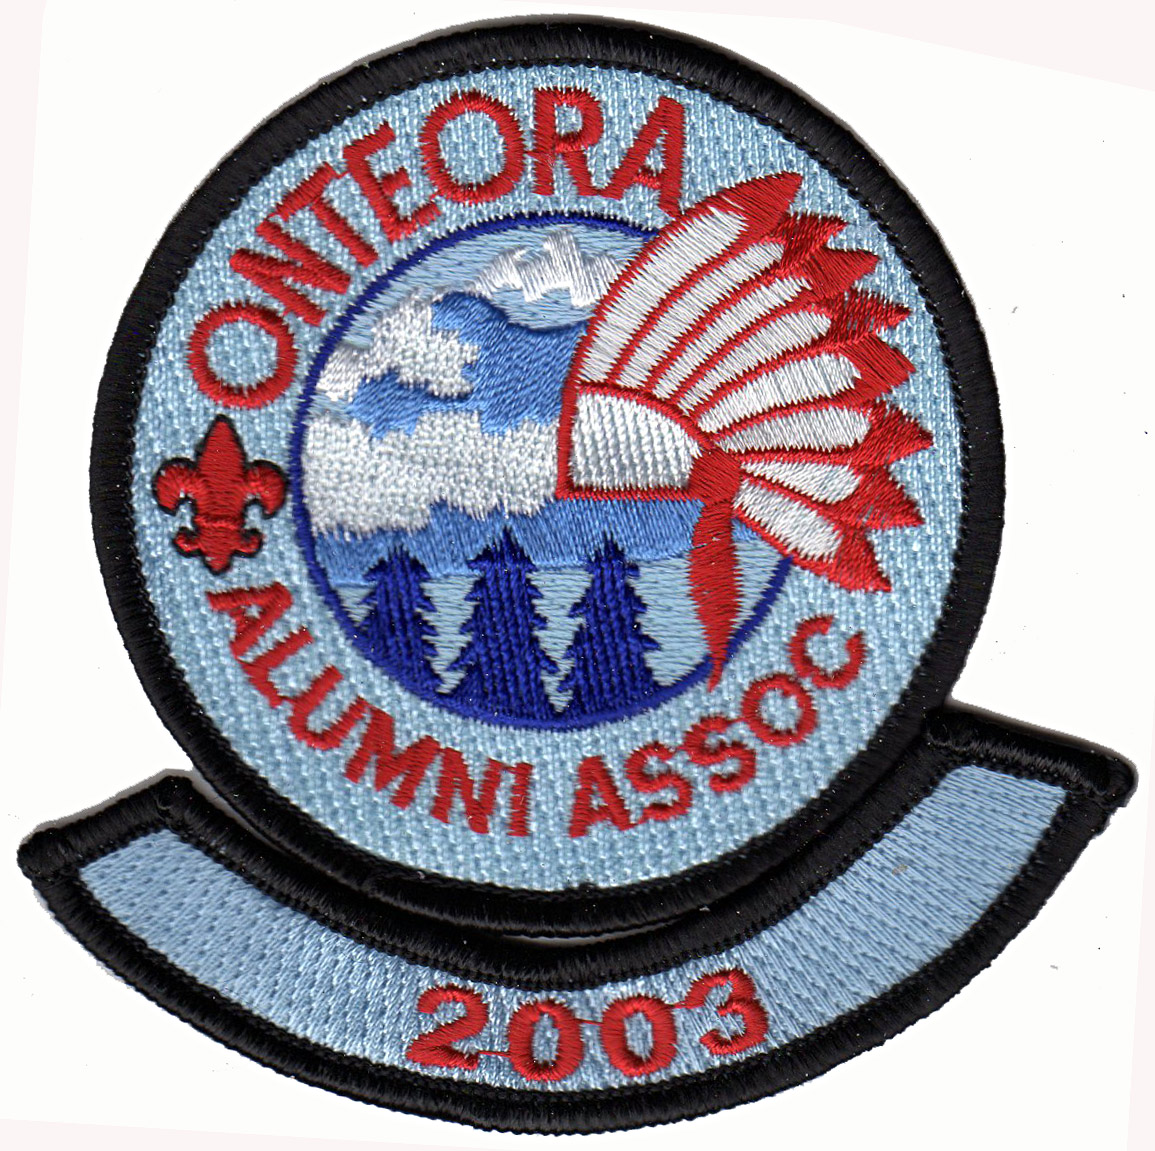 OAA patch - 2003 Charter Member